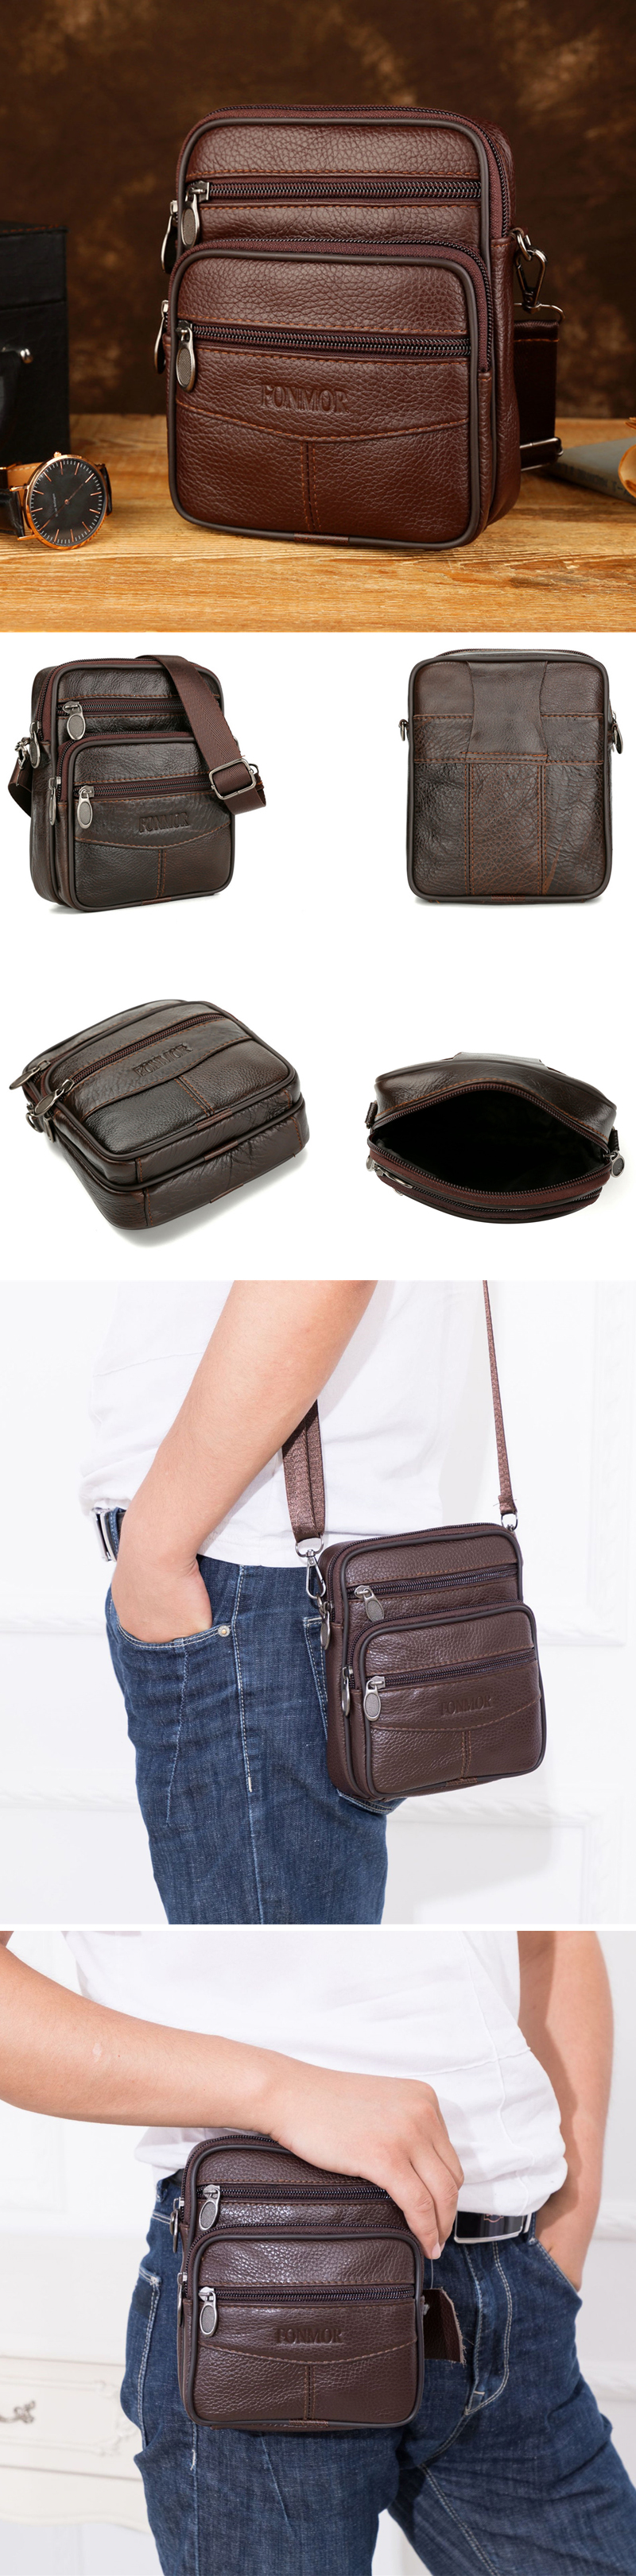 Men-Genuine-Leather-Shoulder-Bag-Handbag-Messenger-Crossbody-Waist-Bag-Phone-Pouch-Outdoor-Travel-1437425-1